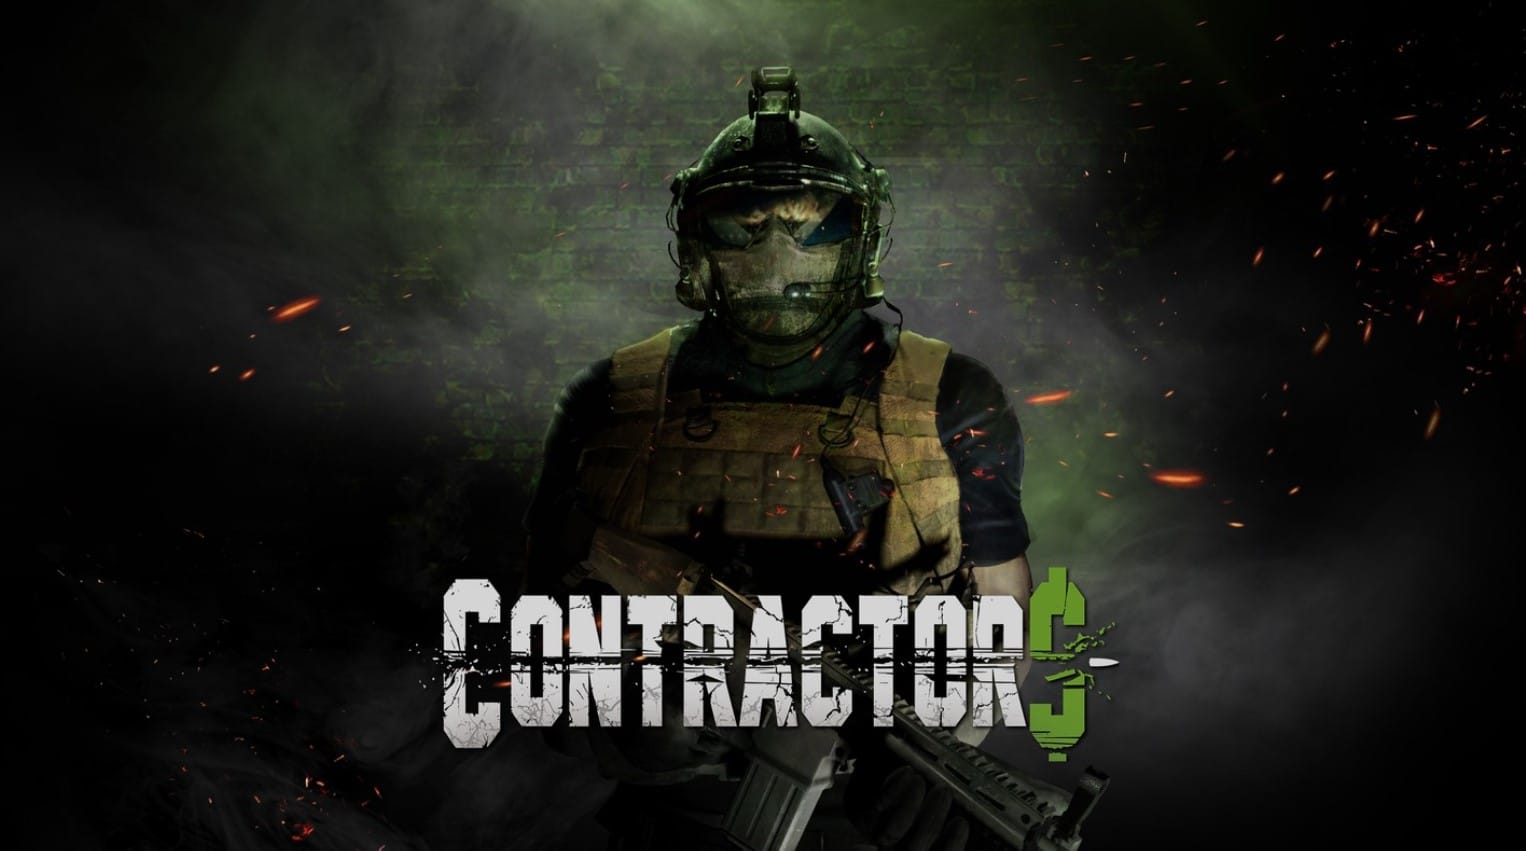 Contractors VR - A Gun Goes Gaming - The Life